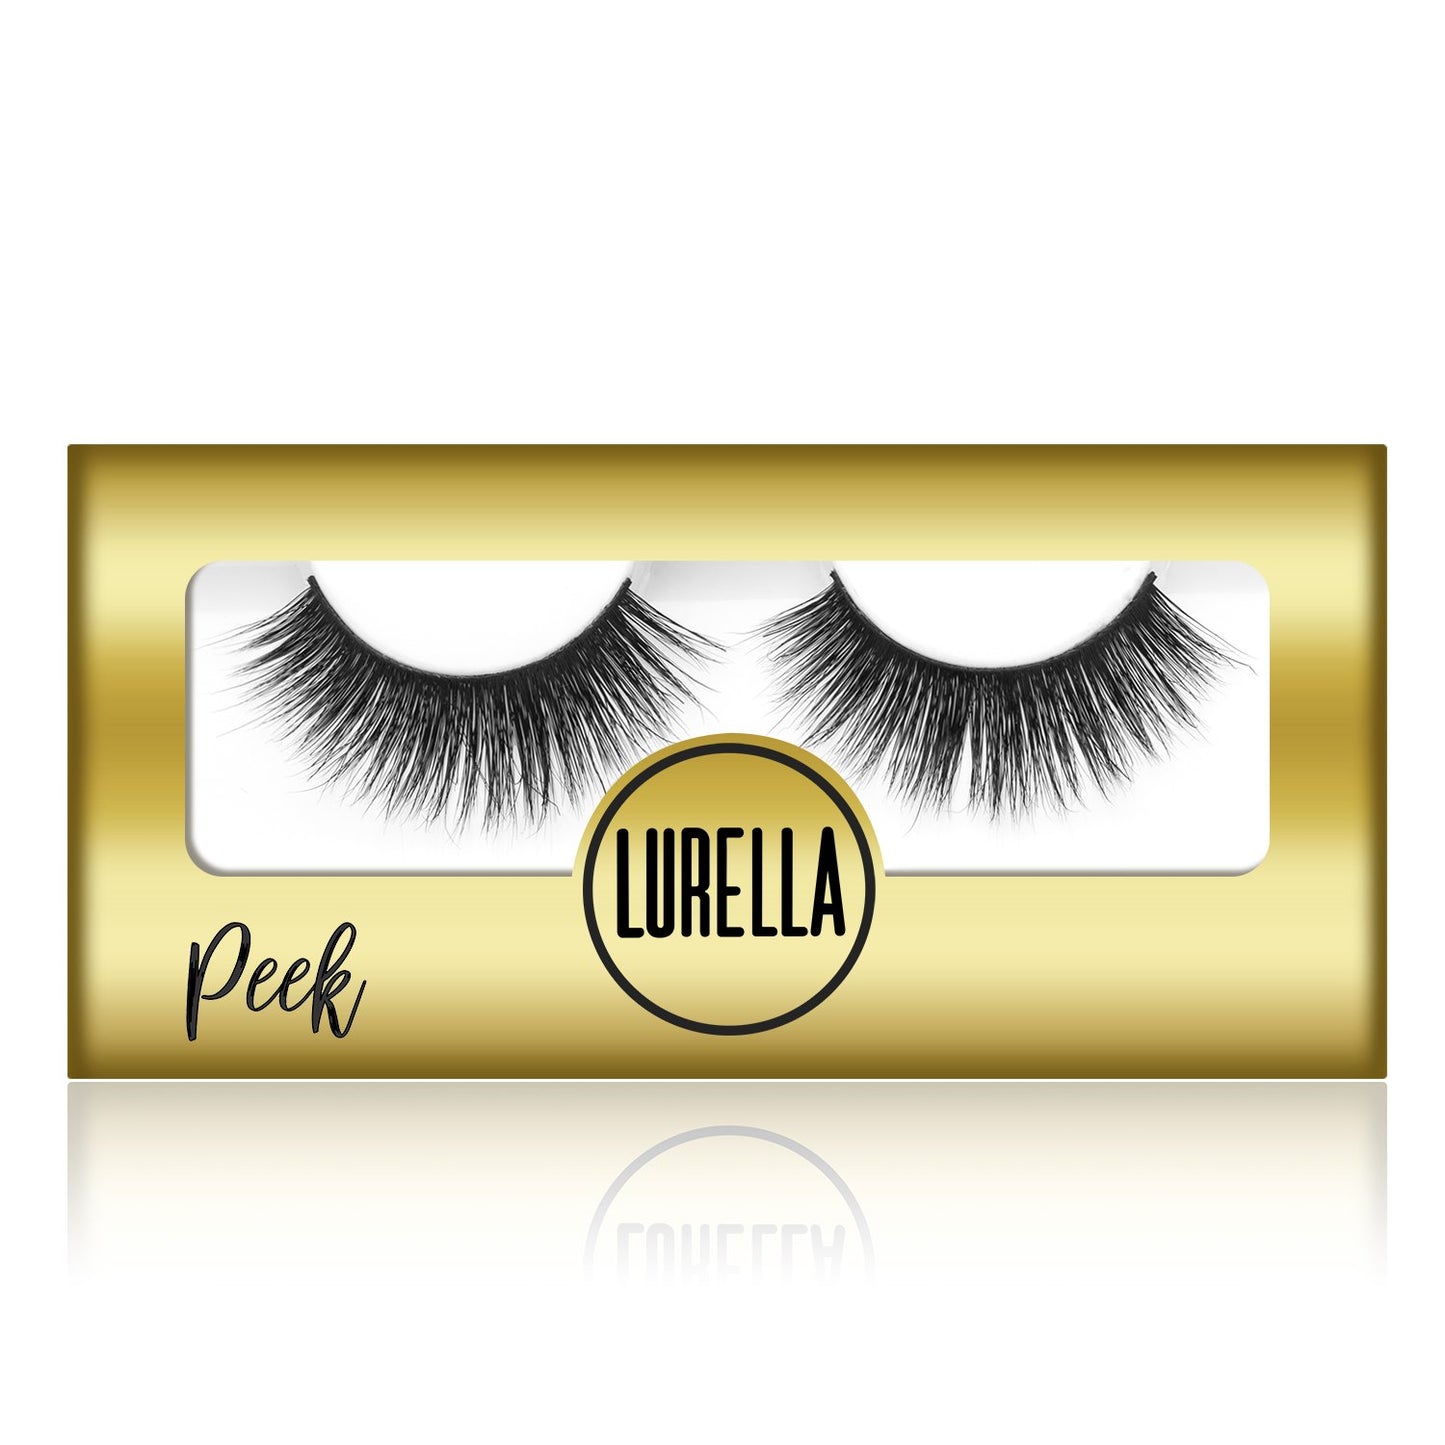 Peek - Lurella Cosmetics